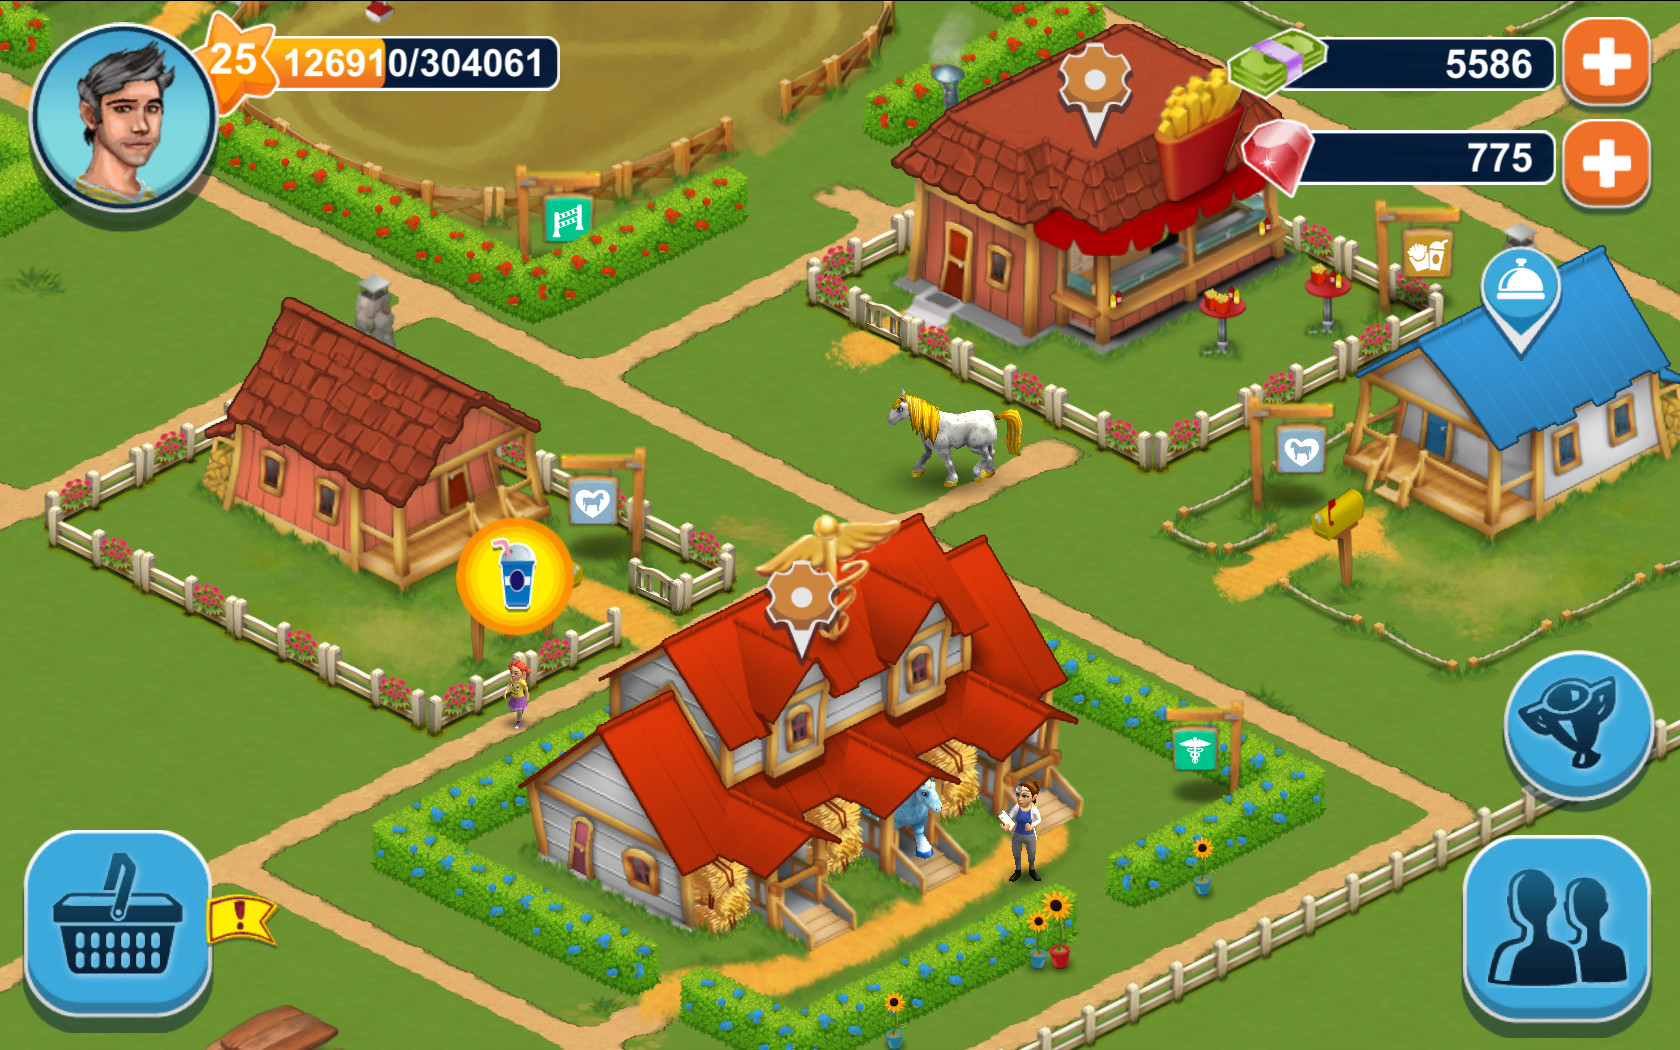 Nintendo switch farm. Horse Farm игра. Игра про ферму на Нинтендо. Игра про ферму на свитч. Ферма игра стим.